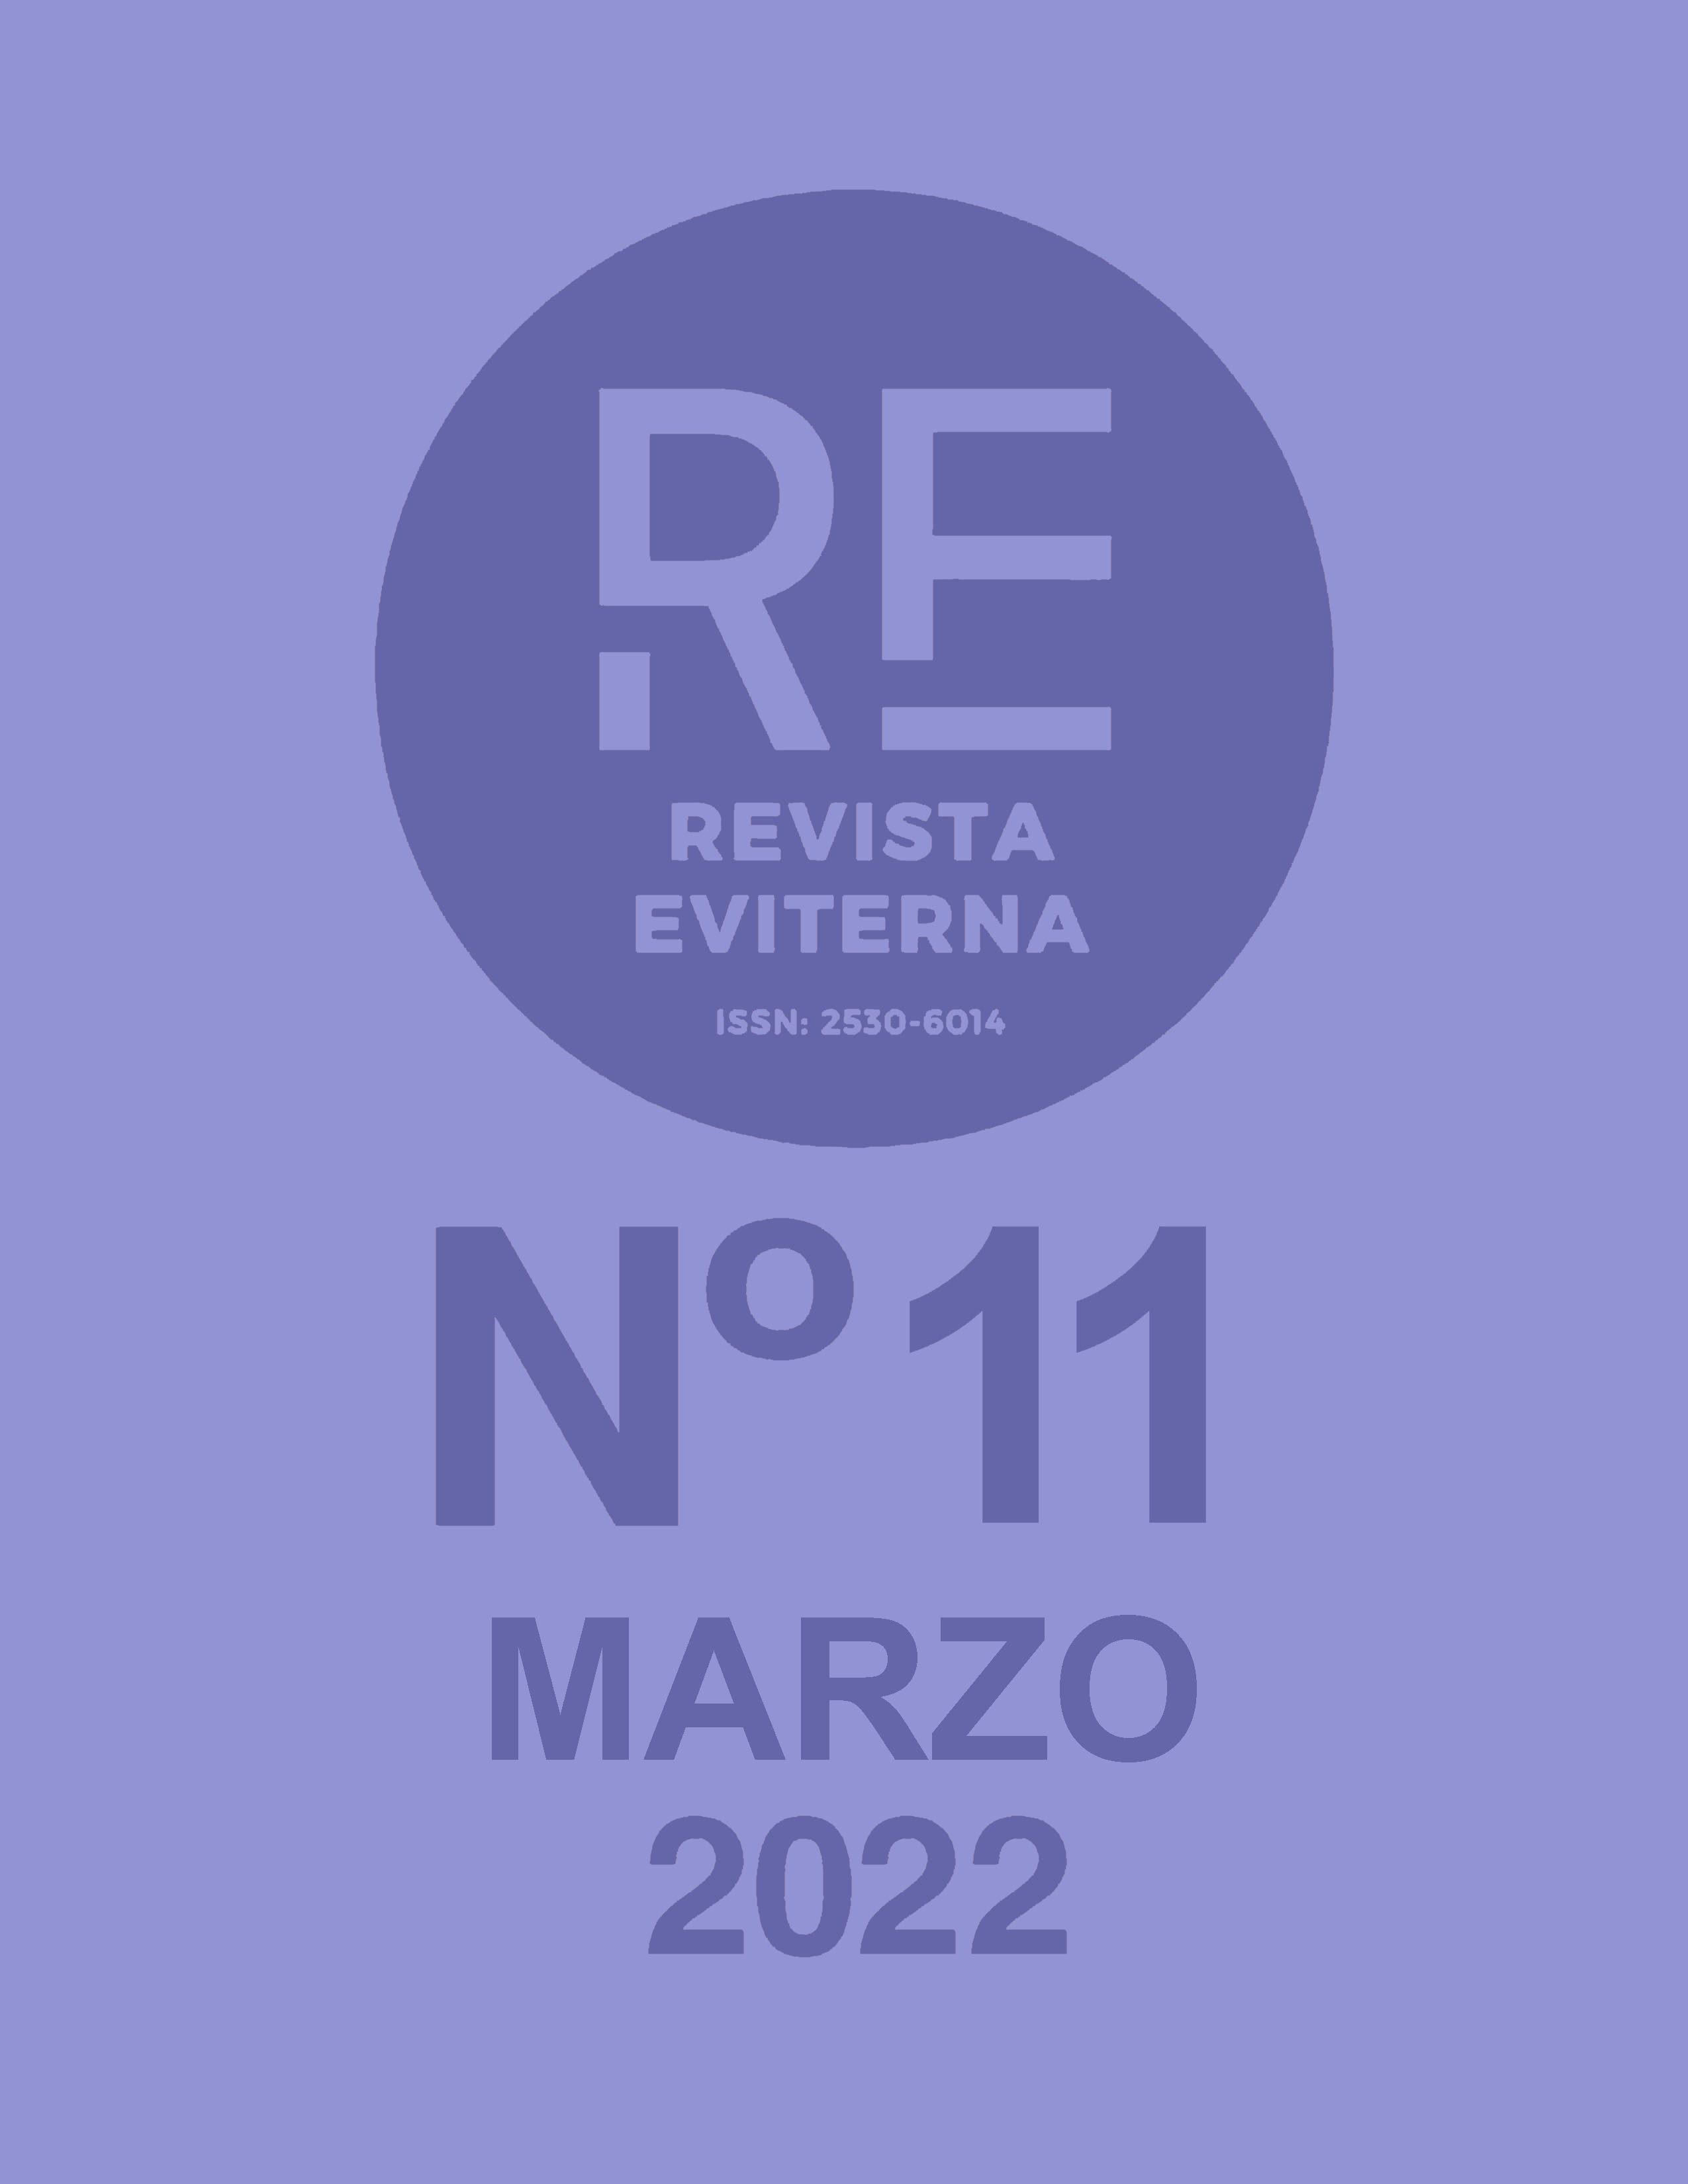 					Ver Núm. 11 (2022): Revista Eviterna Nº 11, marzo 2022
				